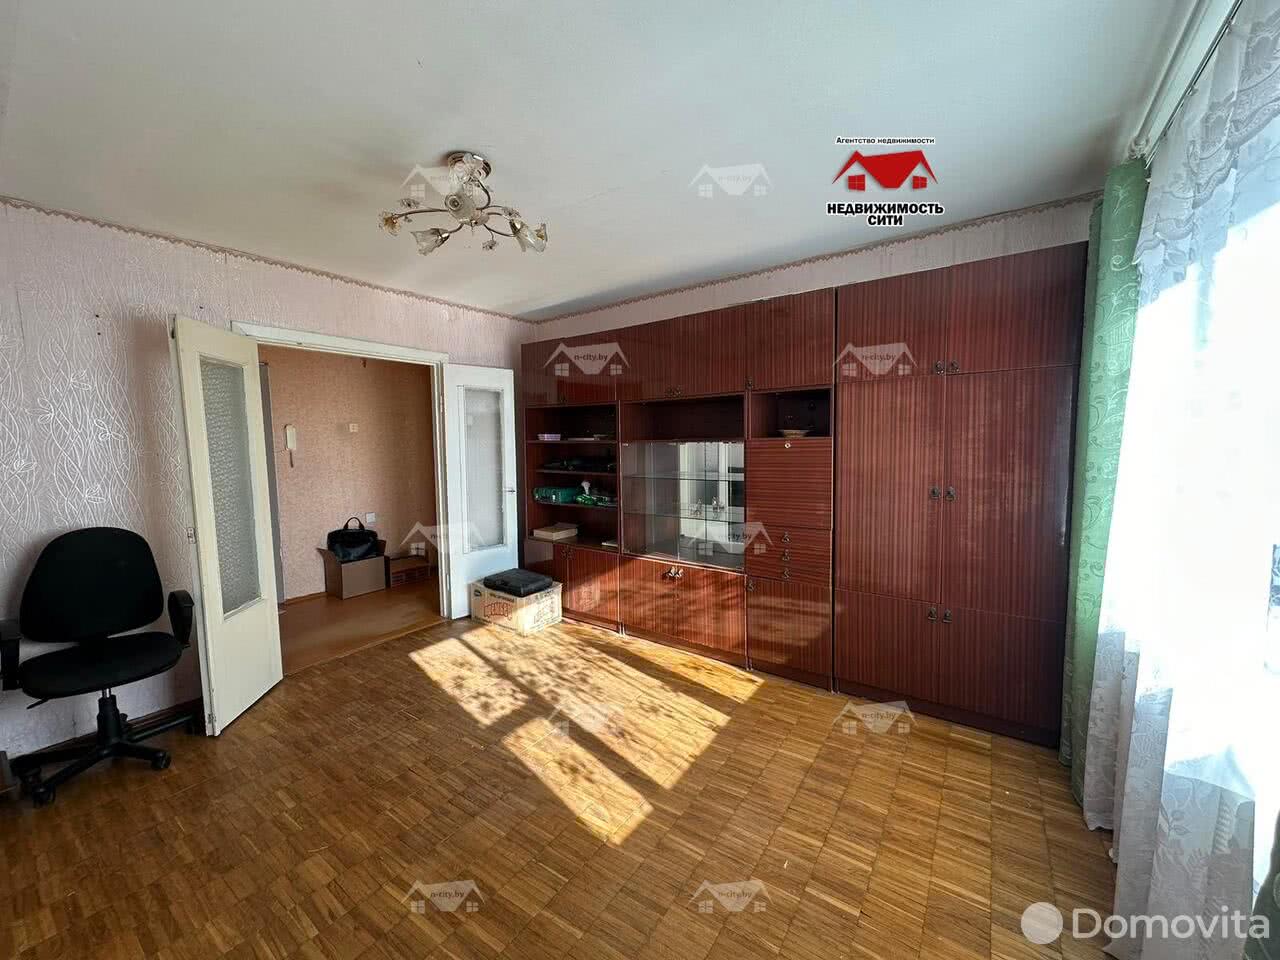 Цена продажи квартиры, Горки, ул. Калинина, д. 29